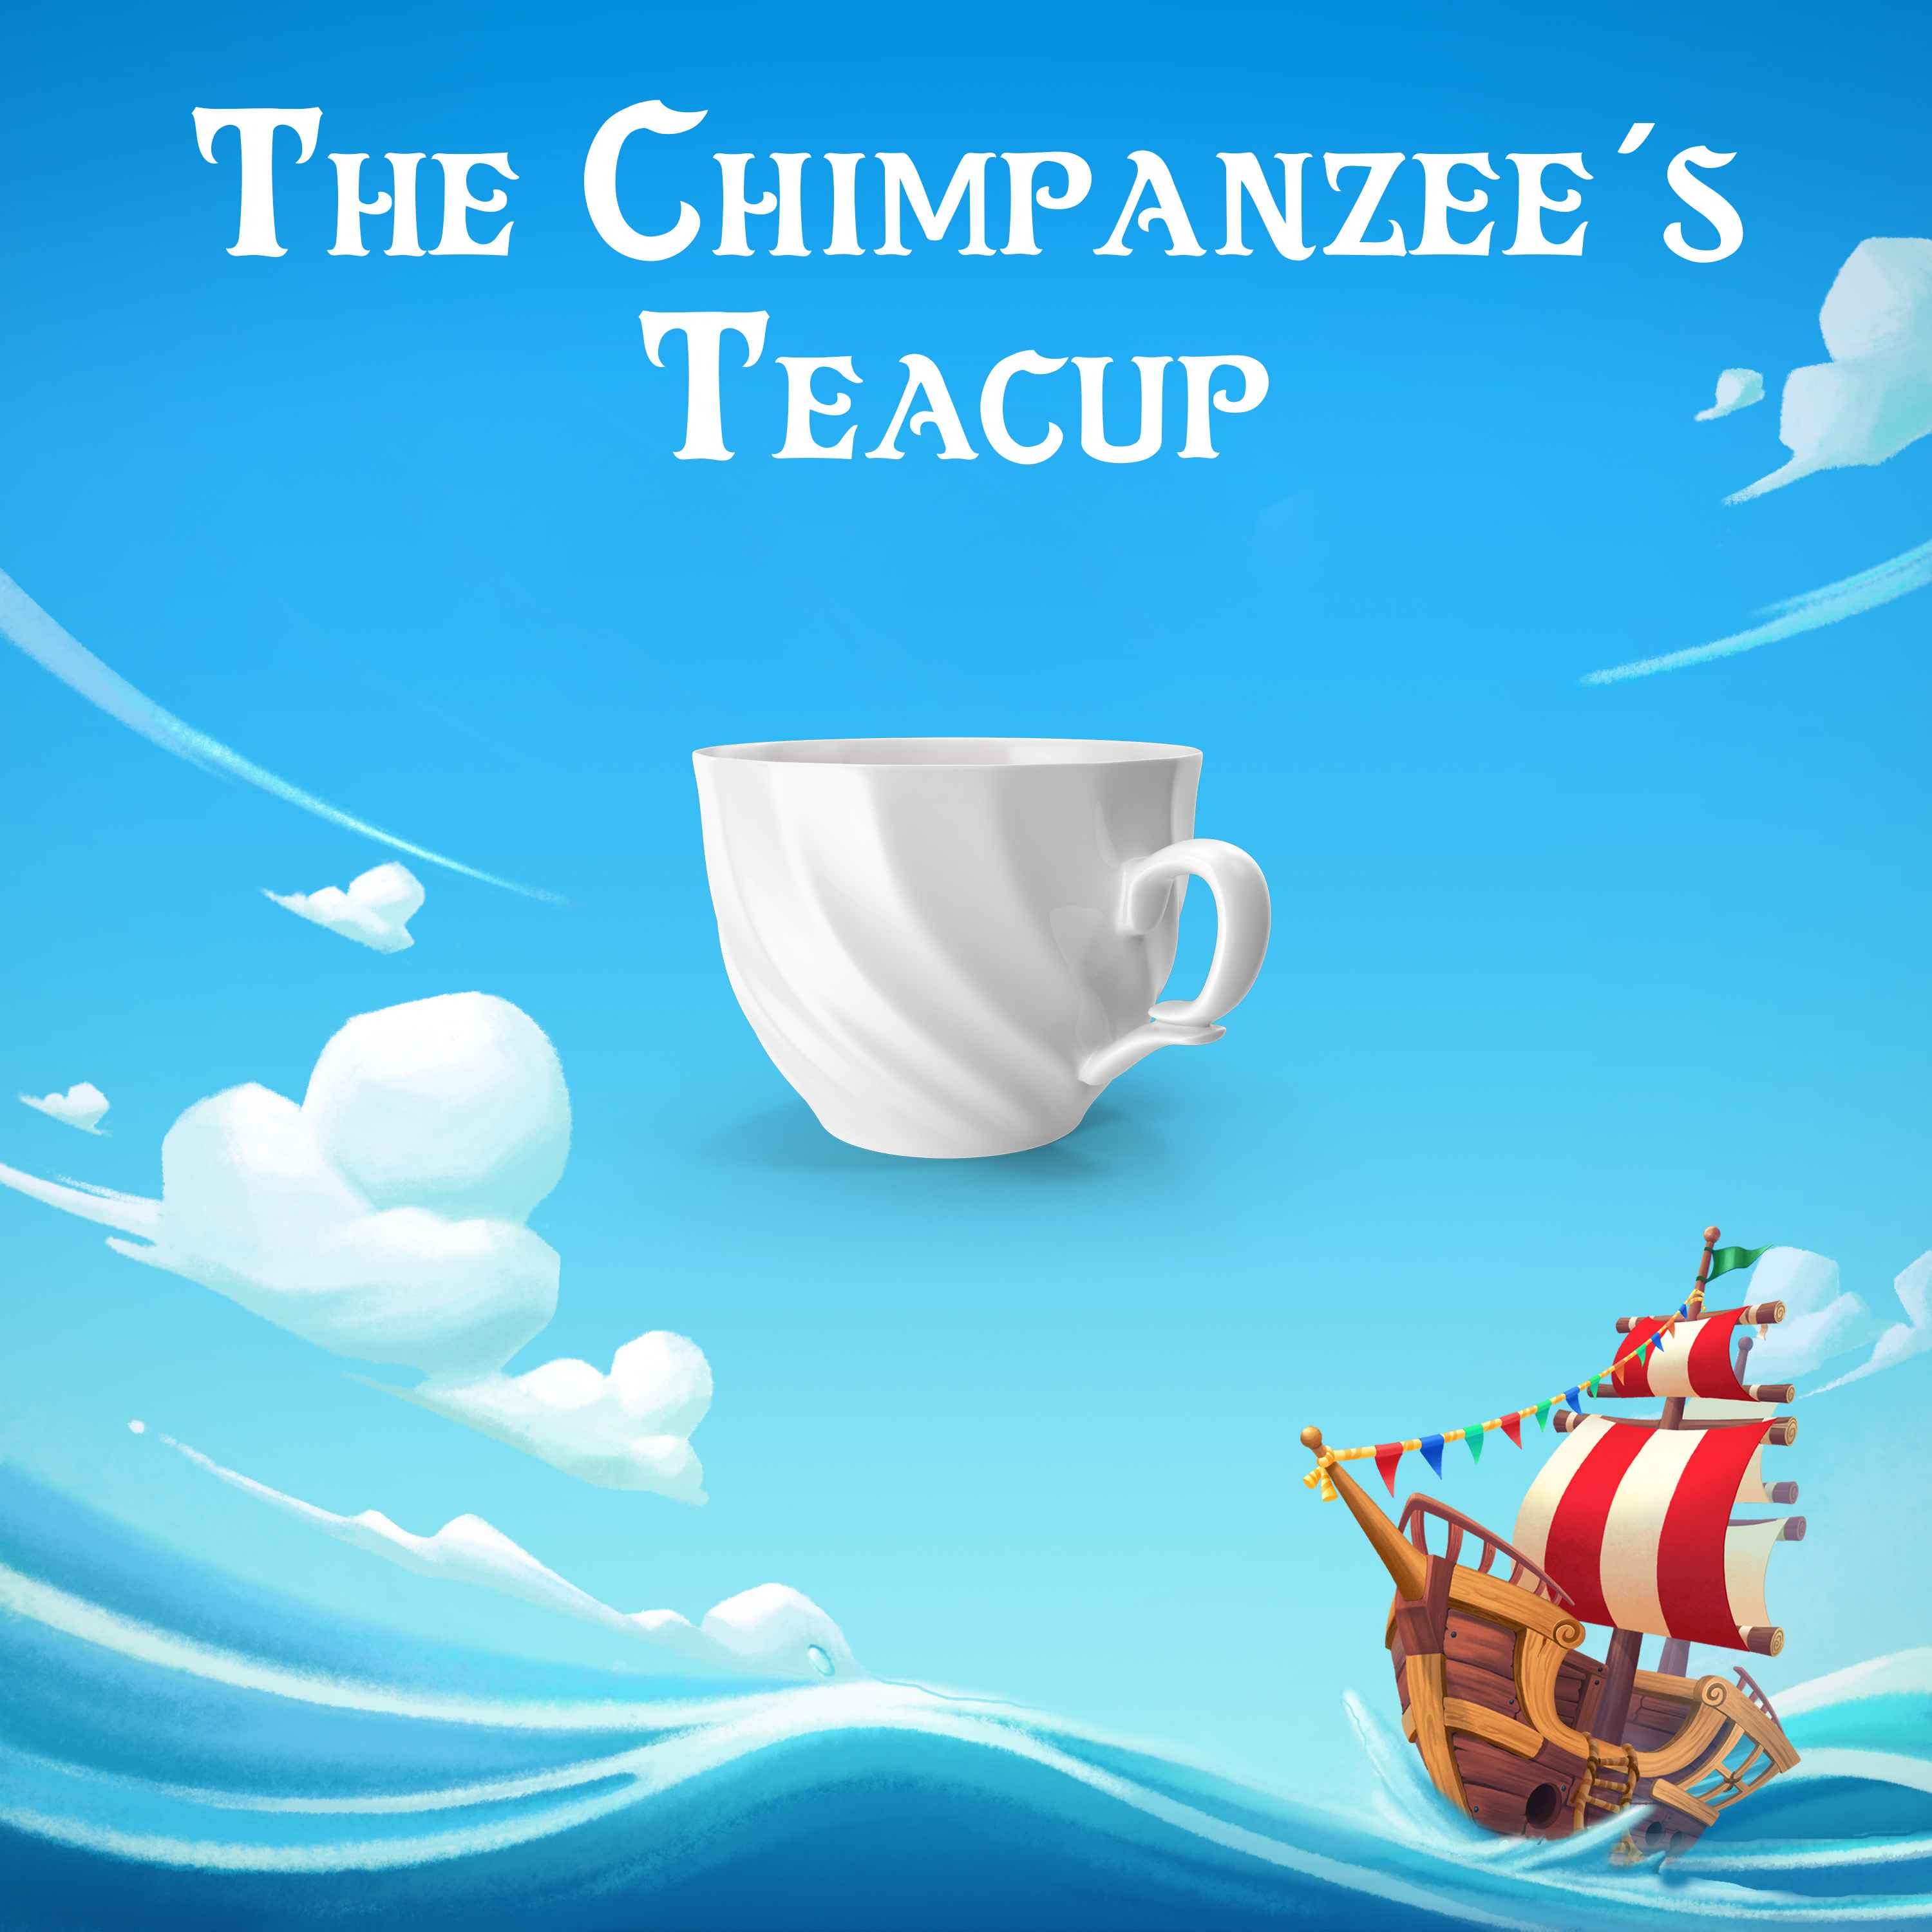 The Chimpanzee's Teacup